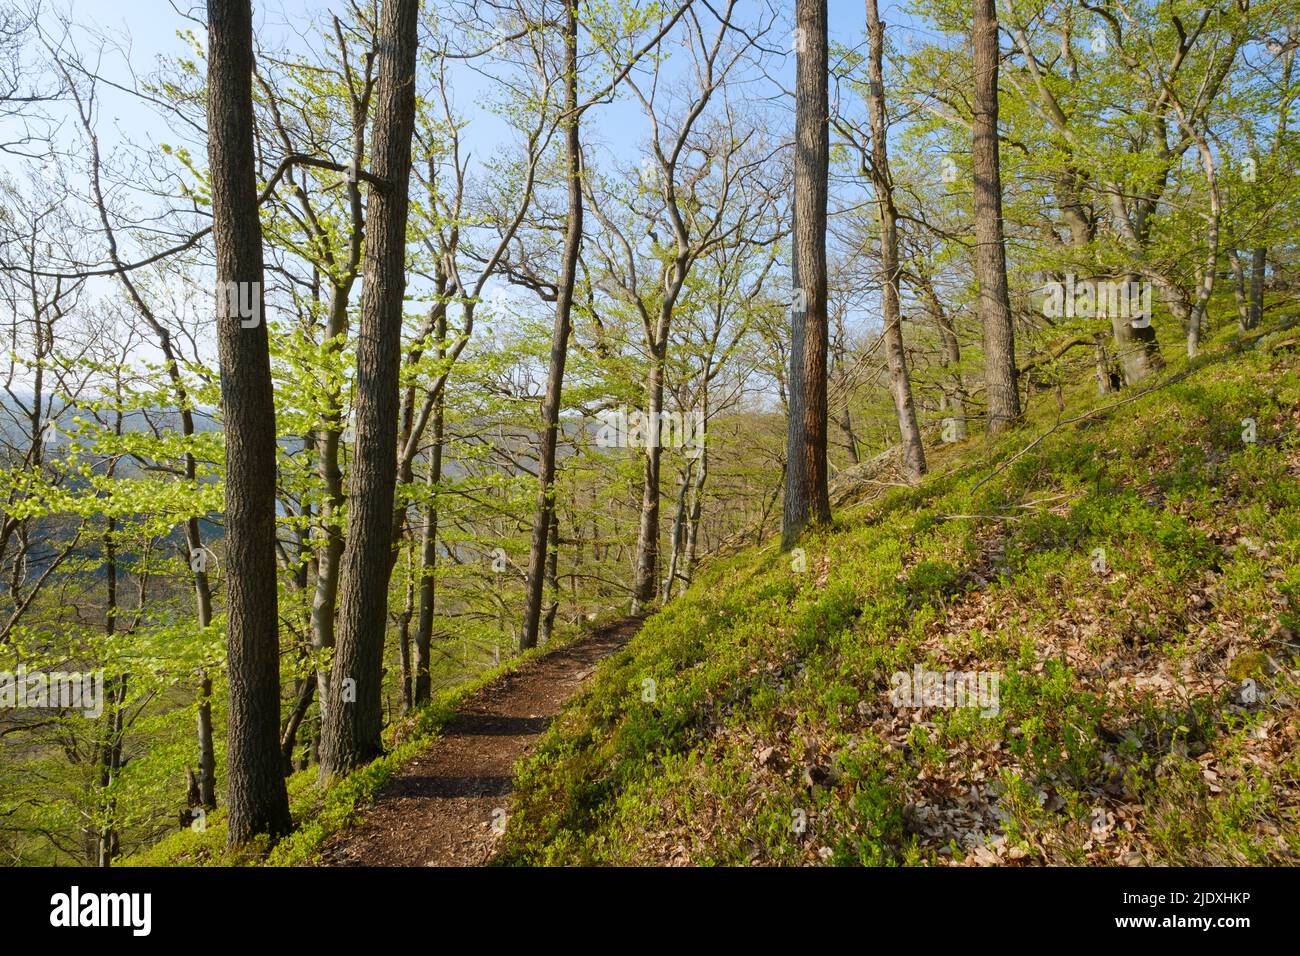 Germany, Hesse, Knorreichenstieg trail in Kellerwald-Edersee National Park Stock Photo